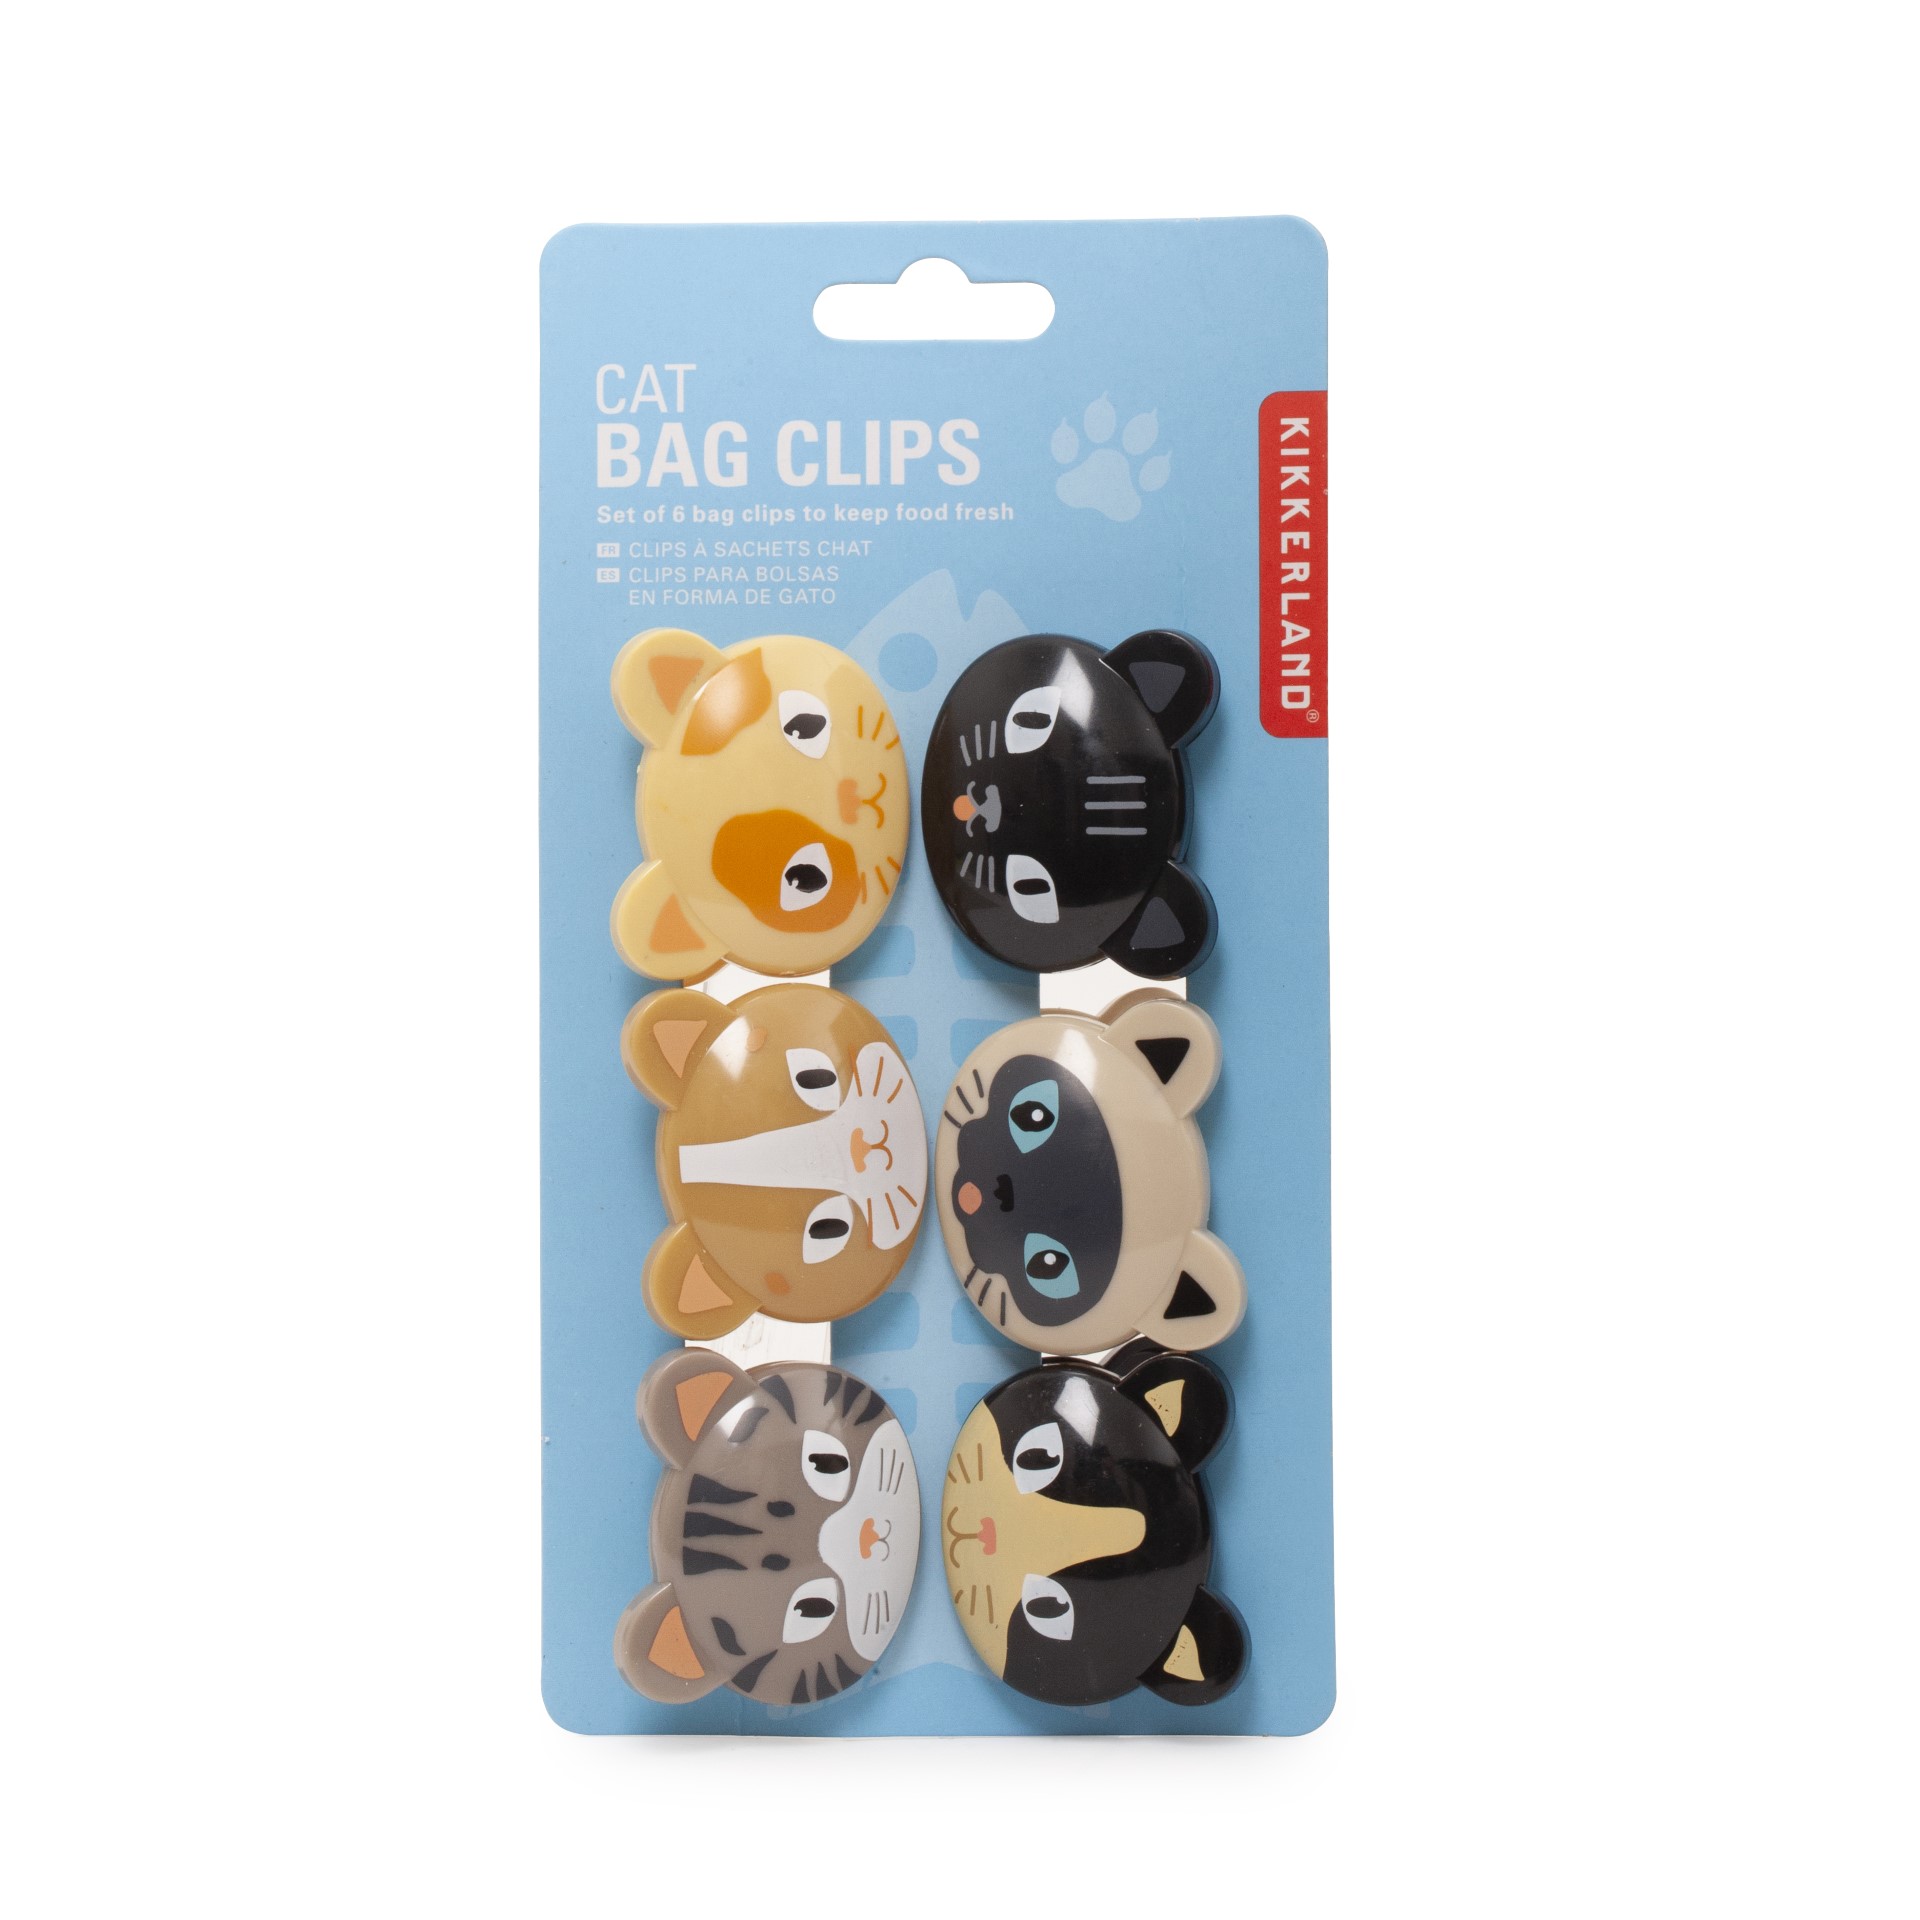 Cat bag clips S/6